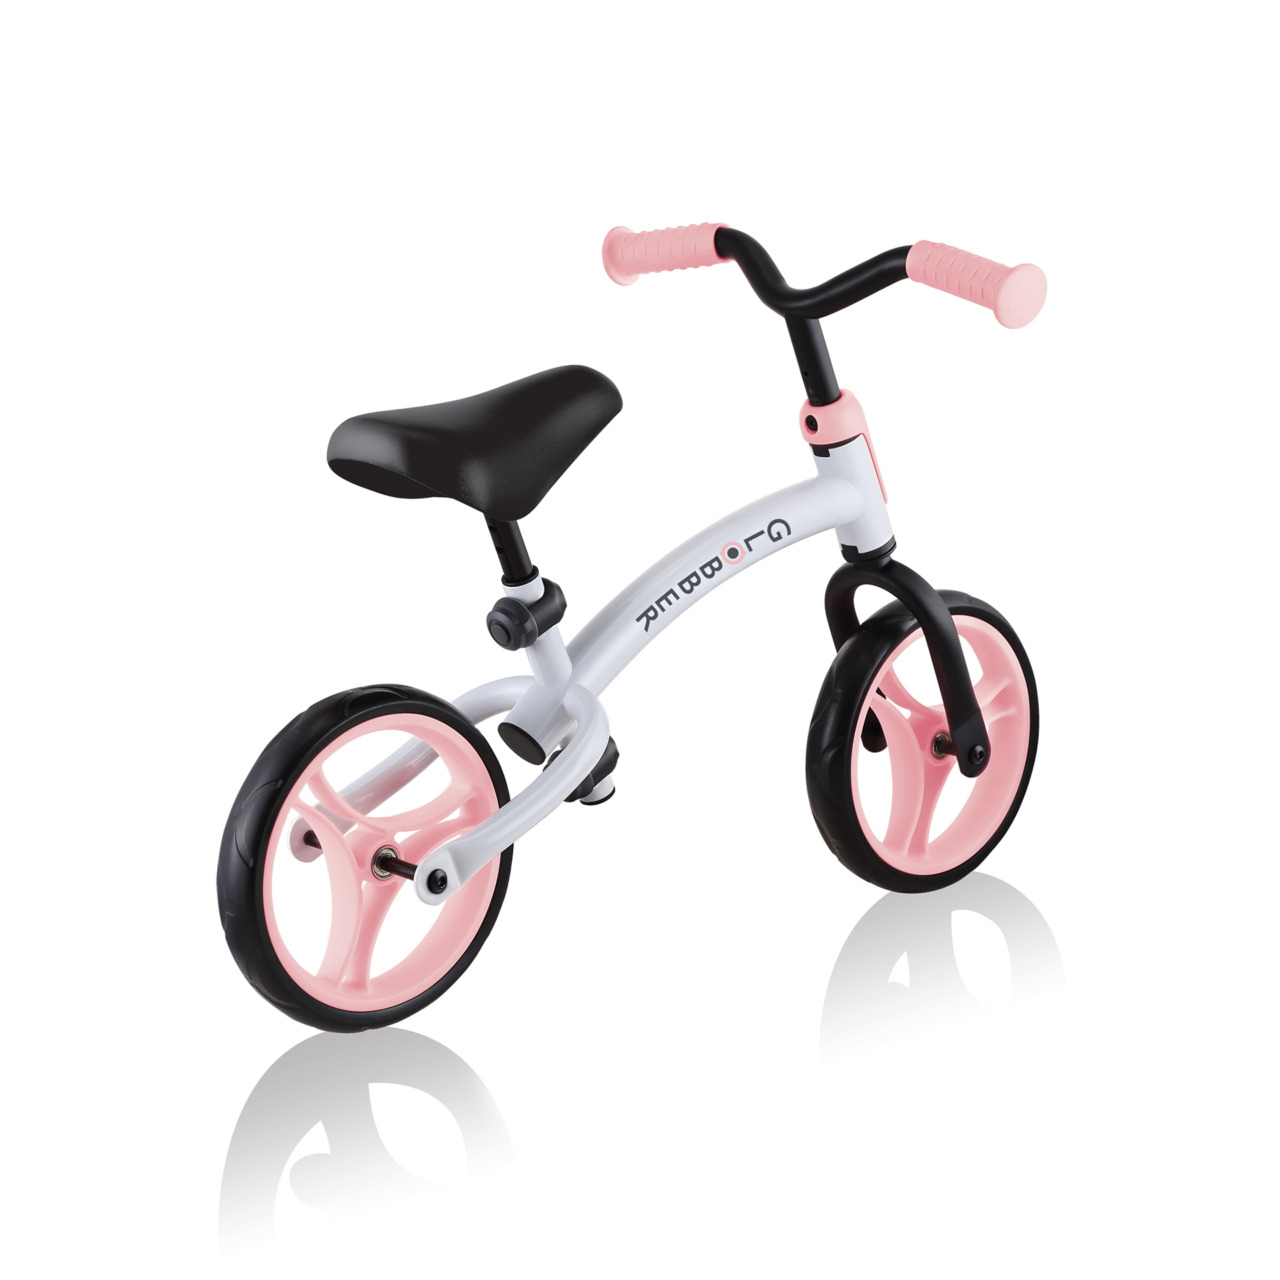 614 210 2 Adjustable Pink Balance Bike For Toddlers